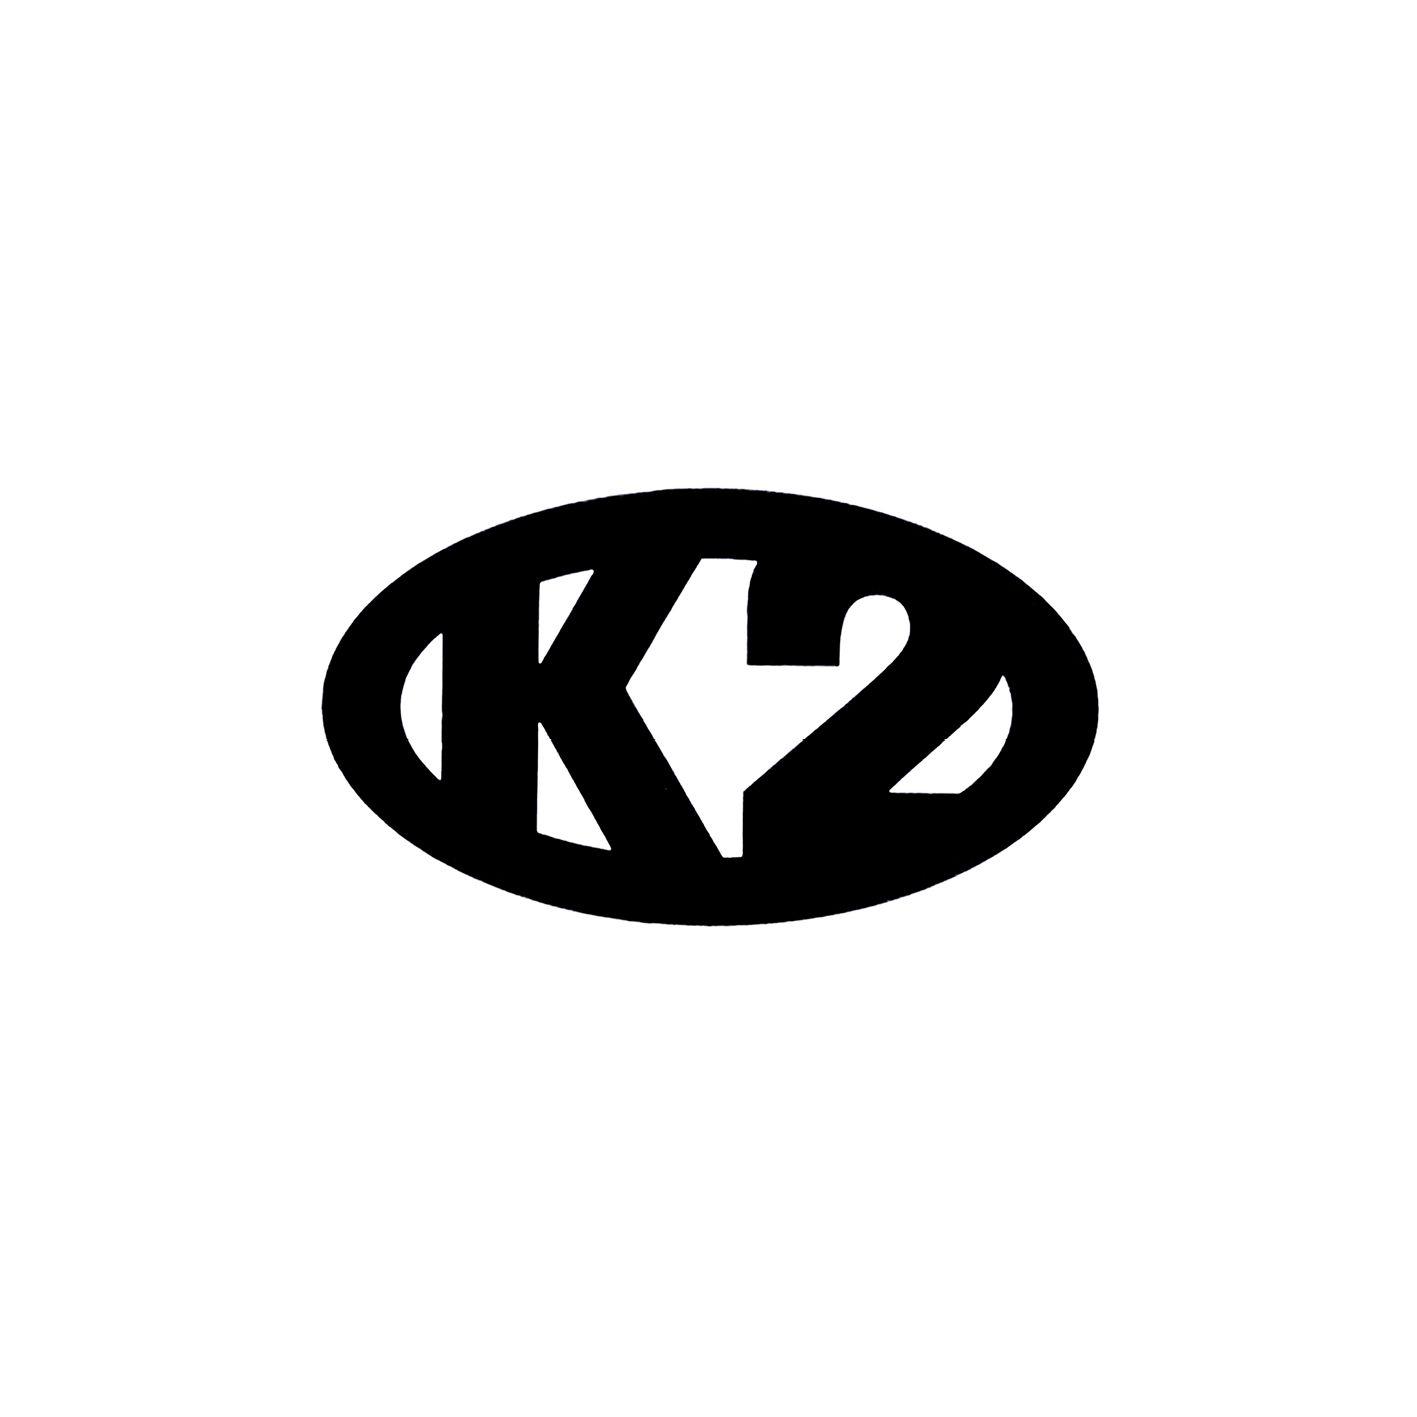 K2 Snowboard Logo - K2 Snowboards Logo